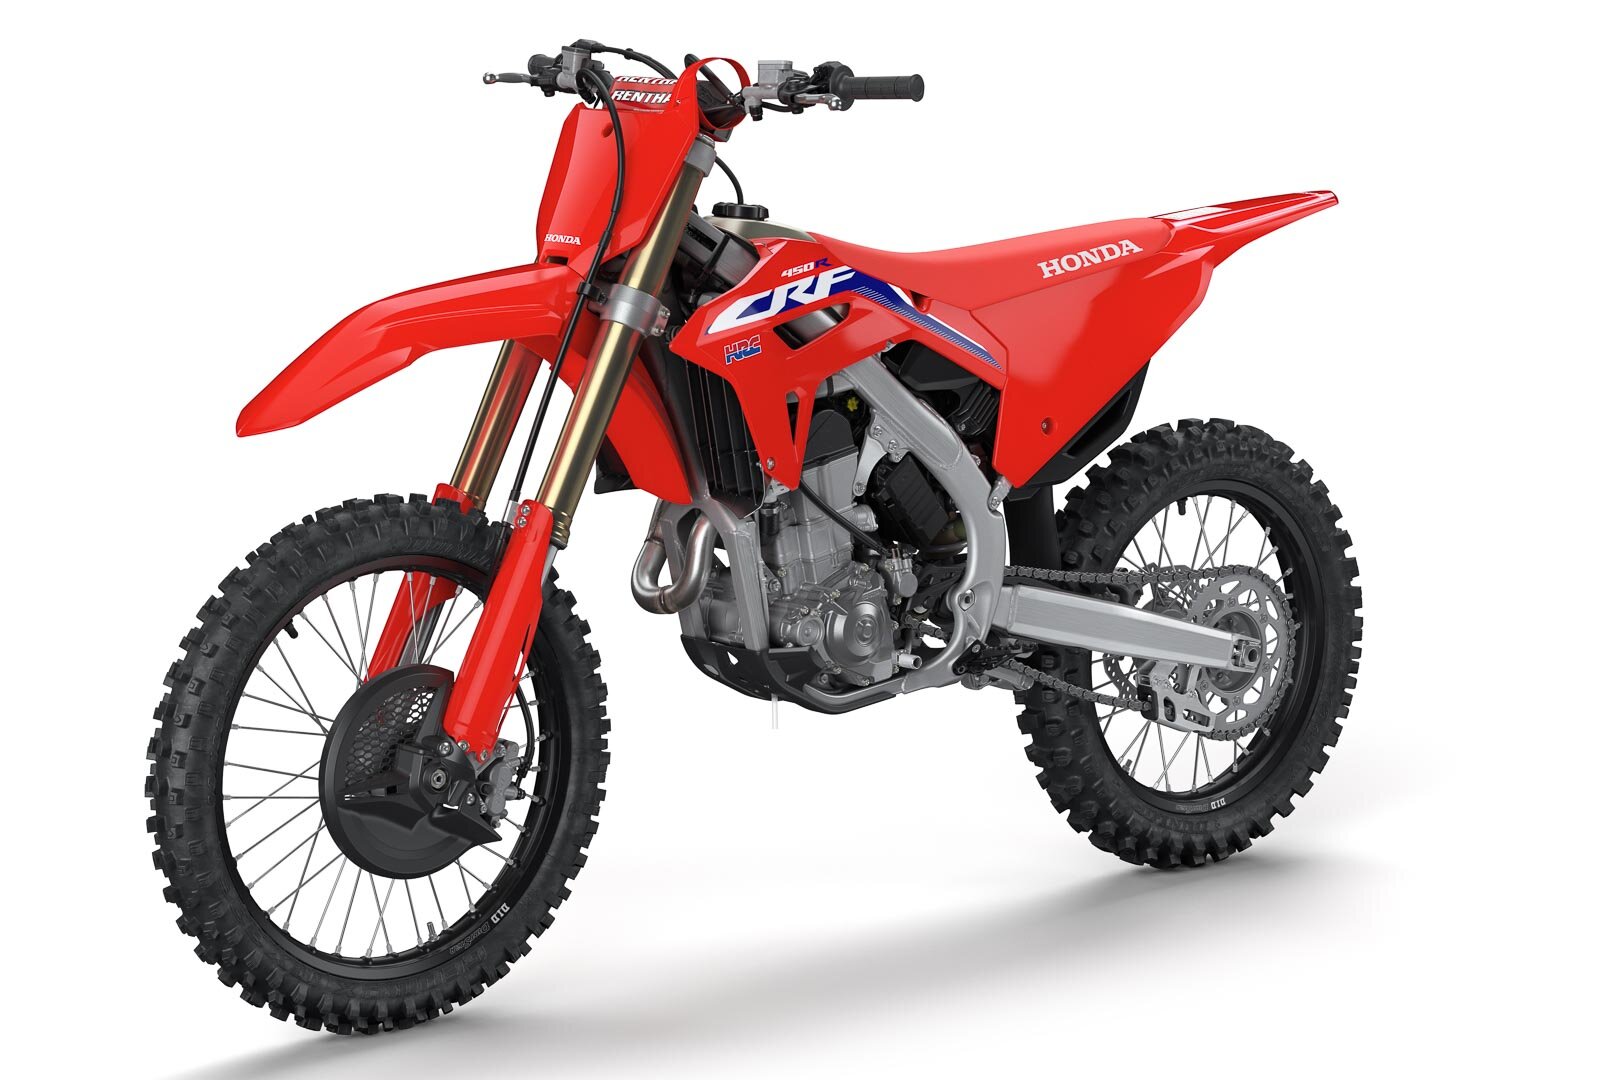 2021-Honda-CRF450R-First-Look-motocross-supercross-motorcycle-4.jpg